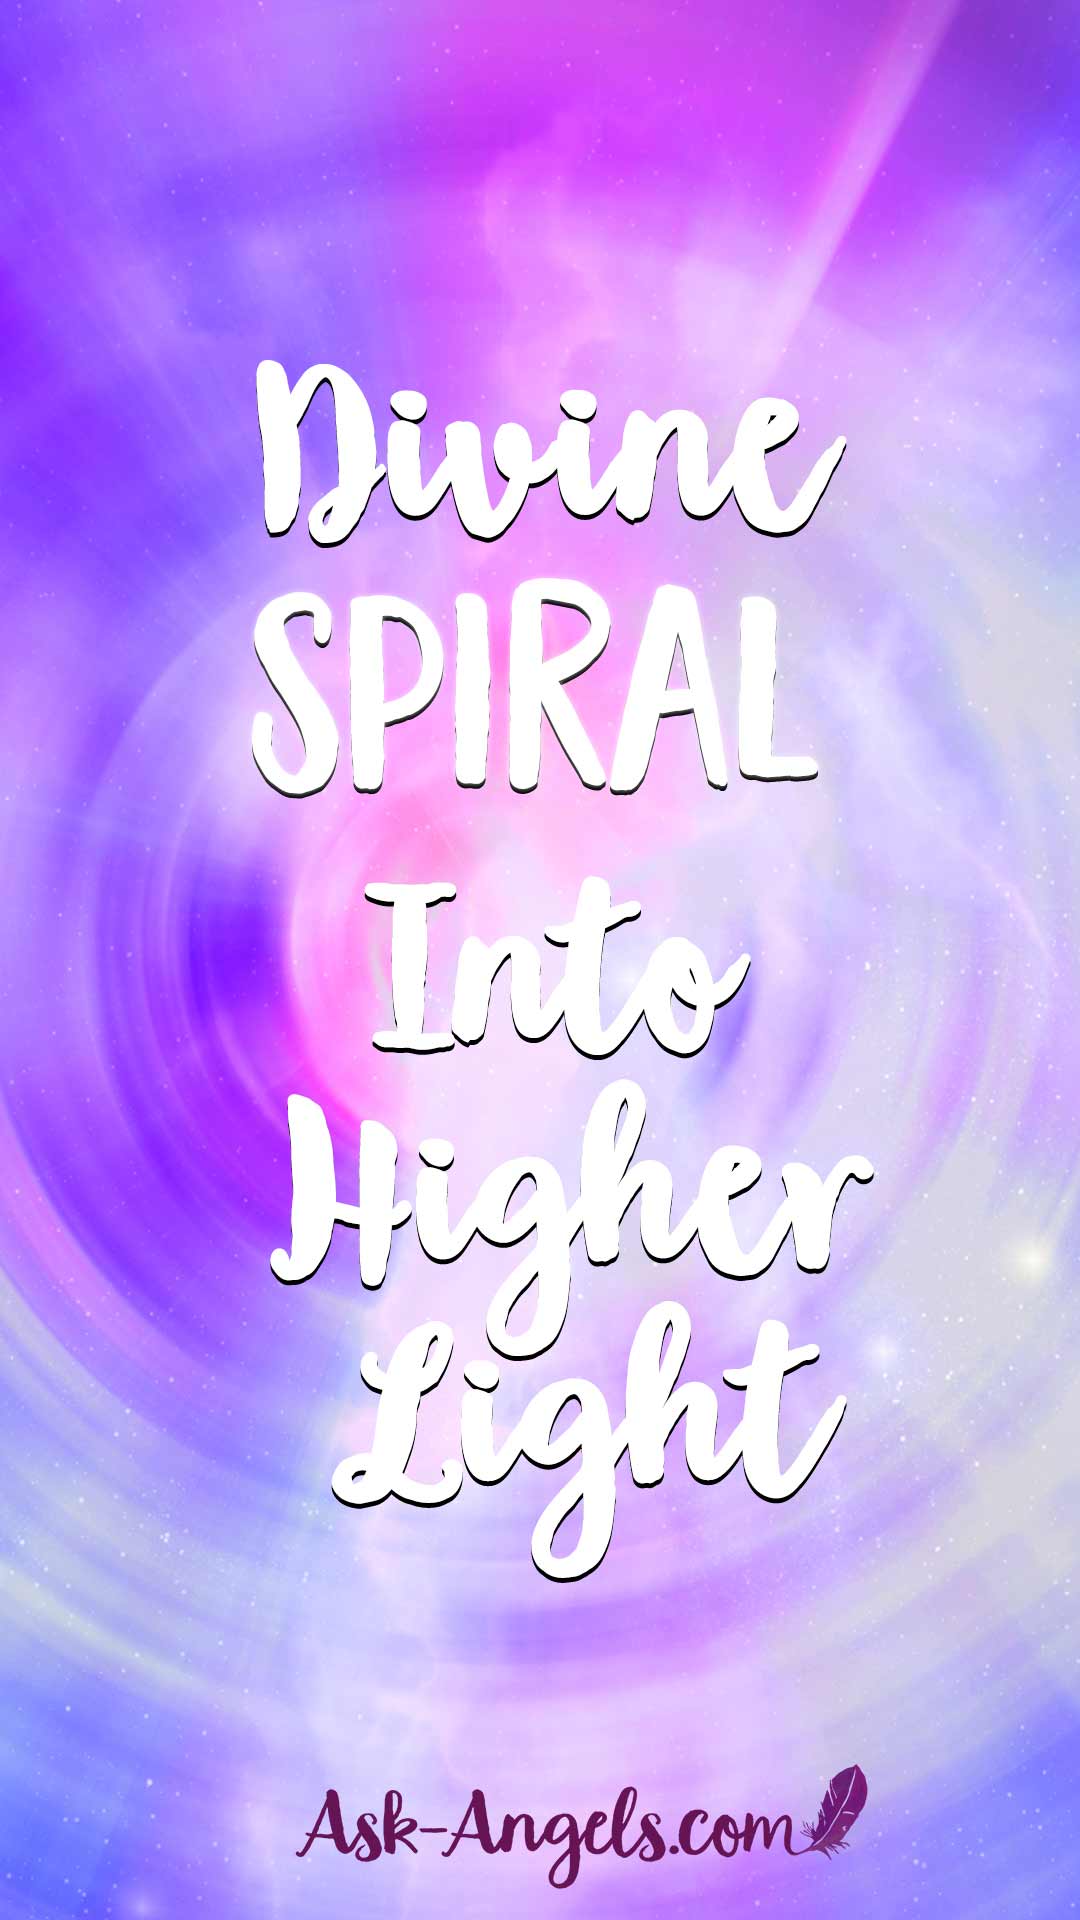 Divine Spiral Into Higher Light